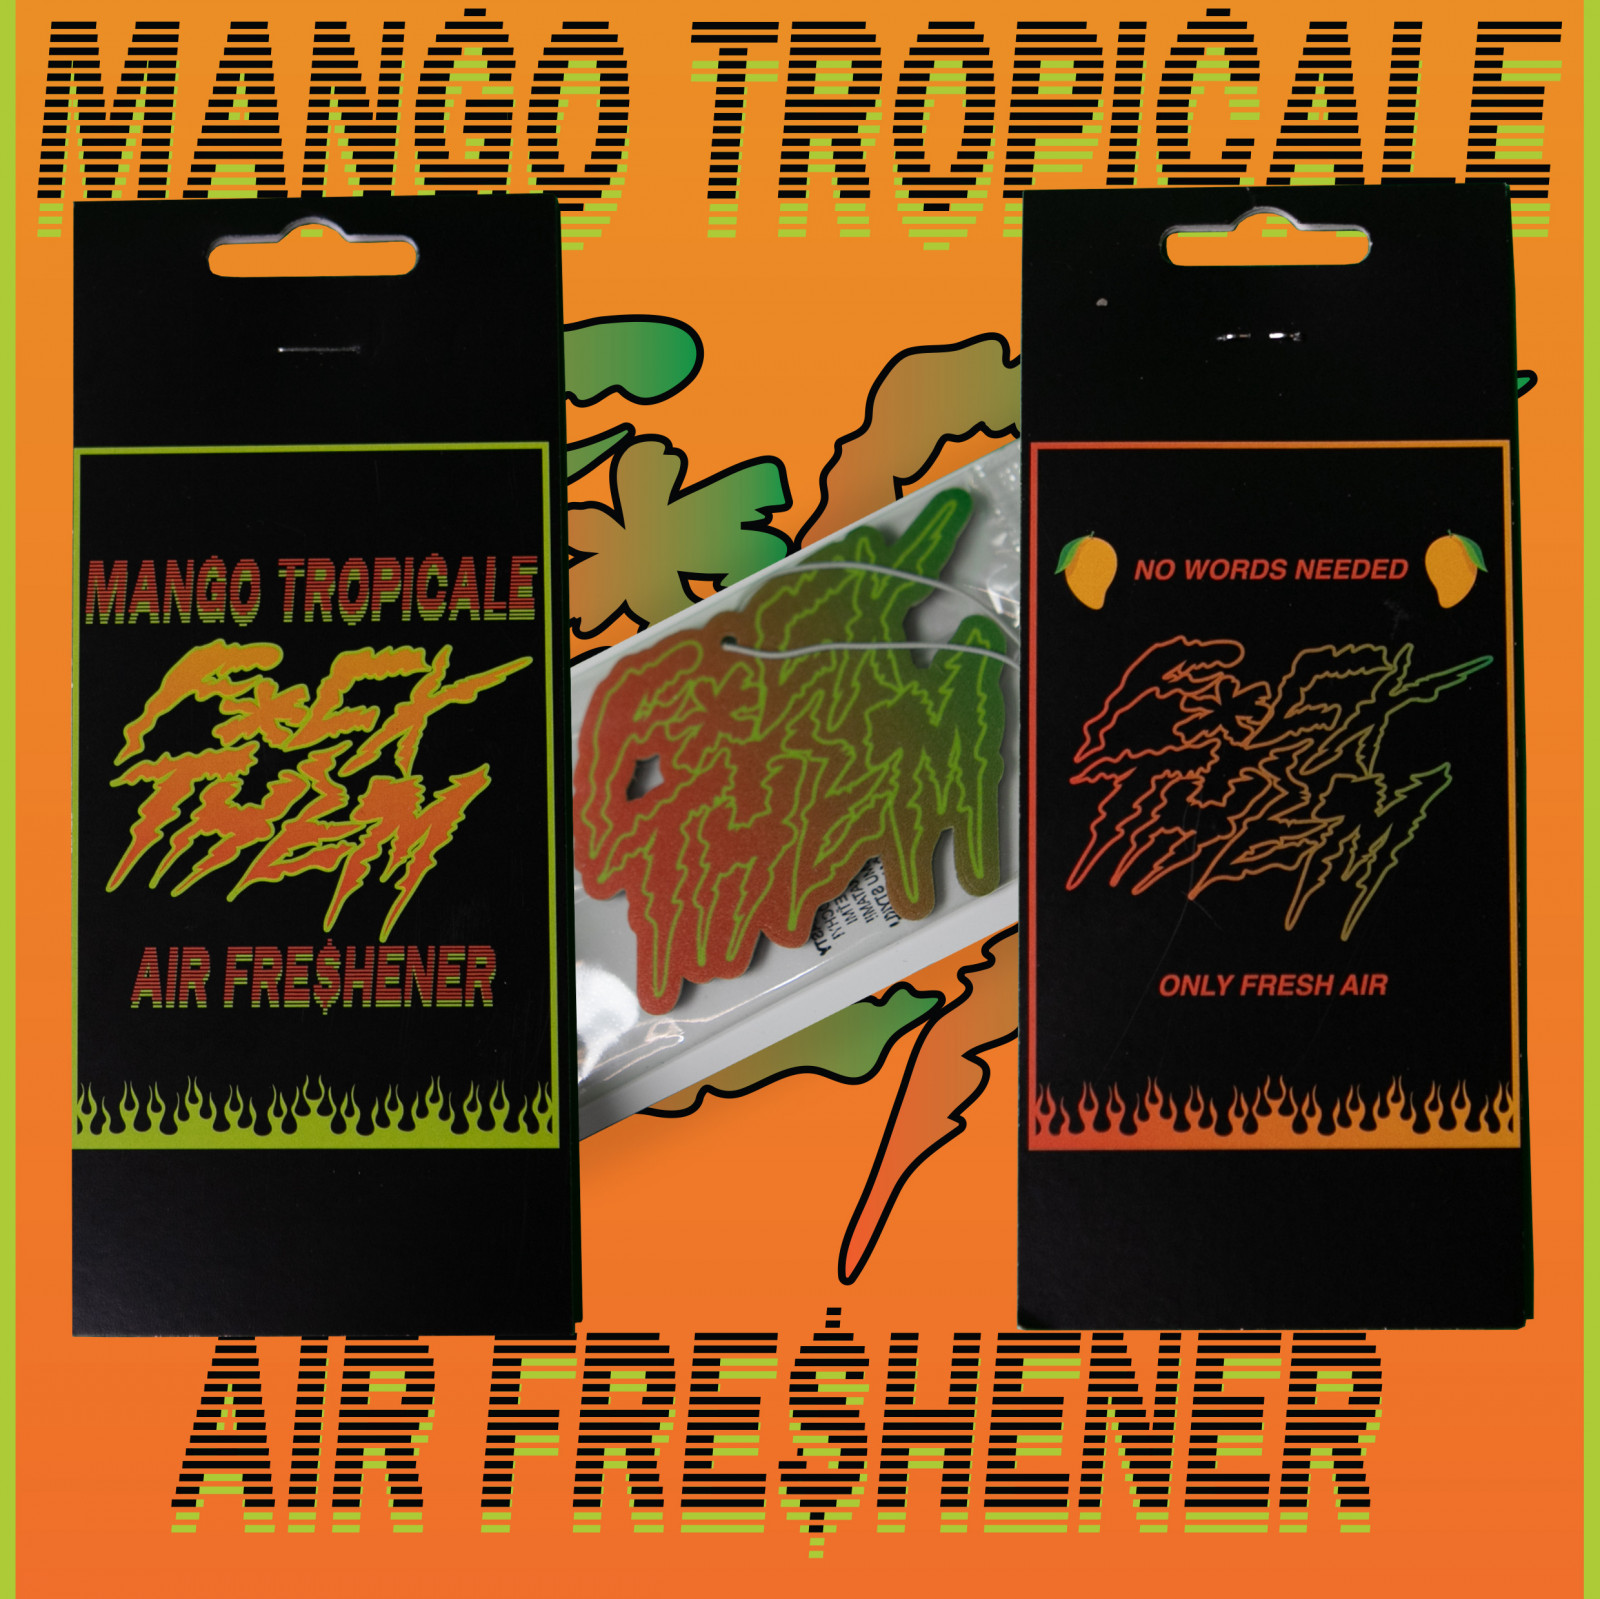 Air Freshener Mango